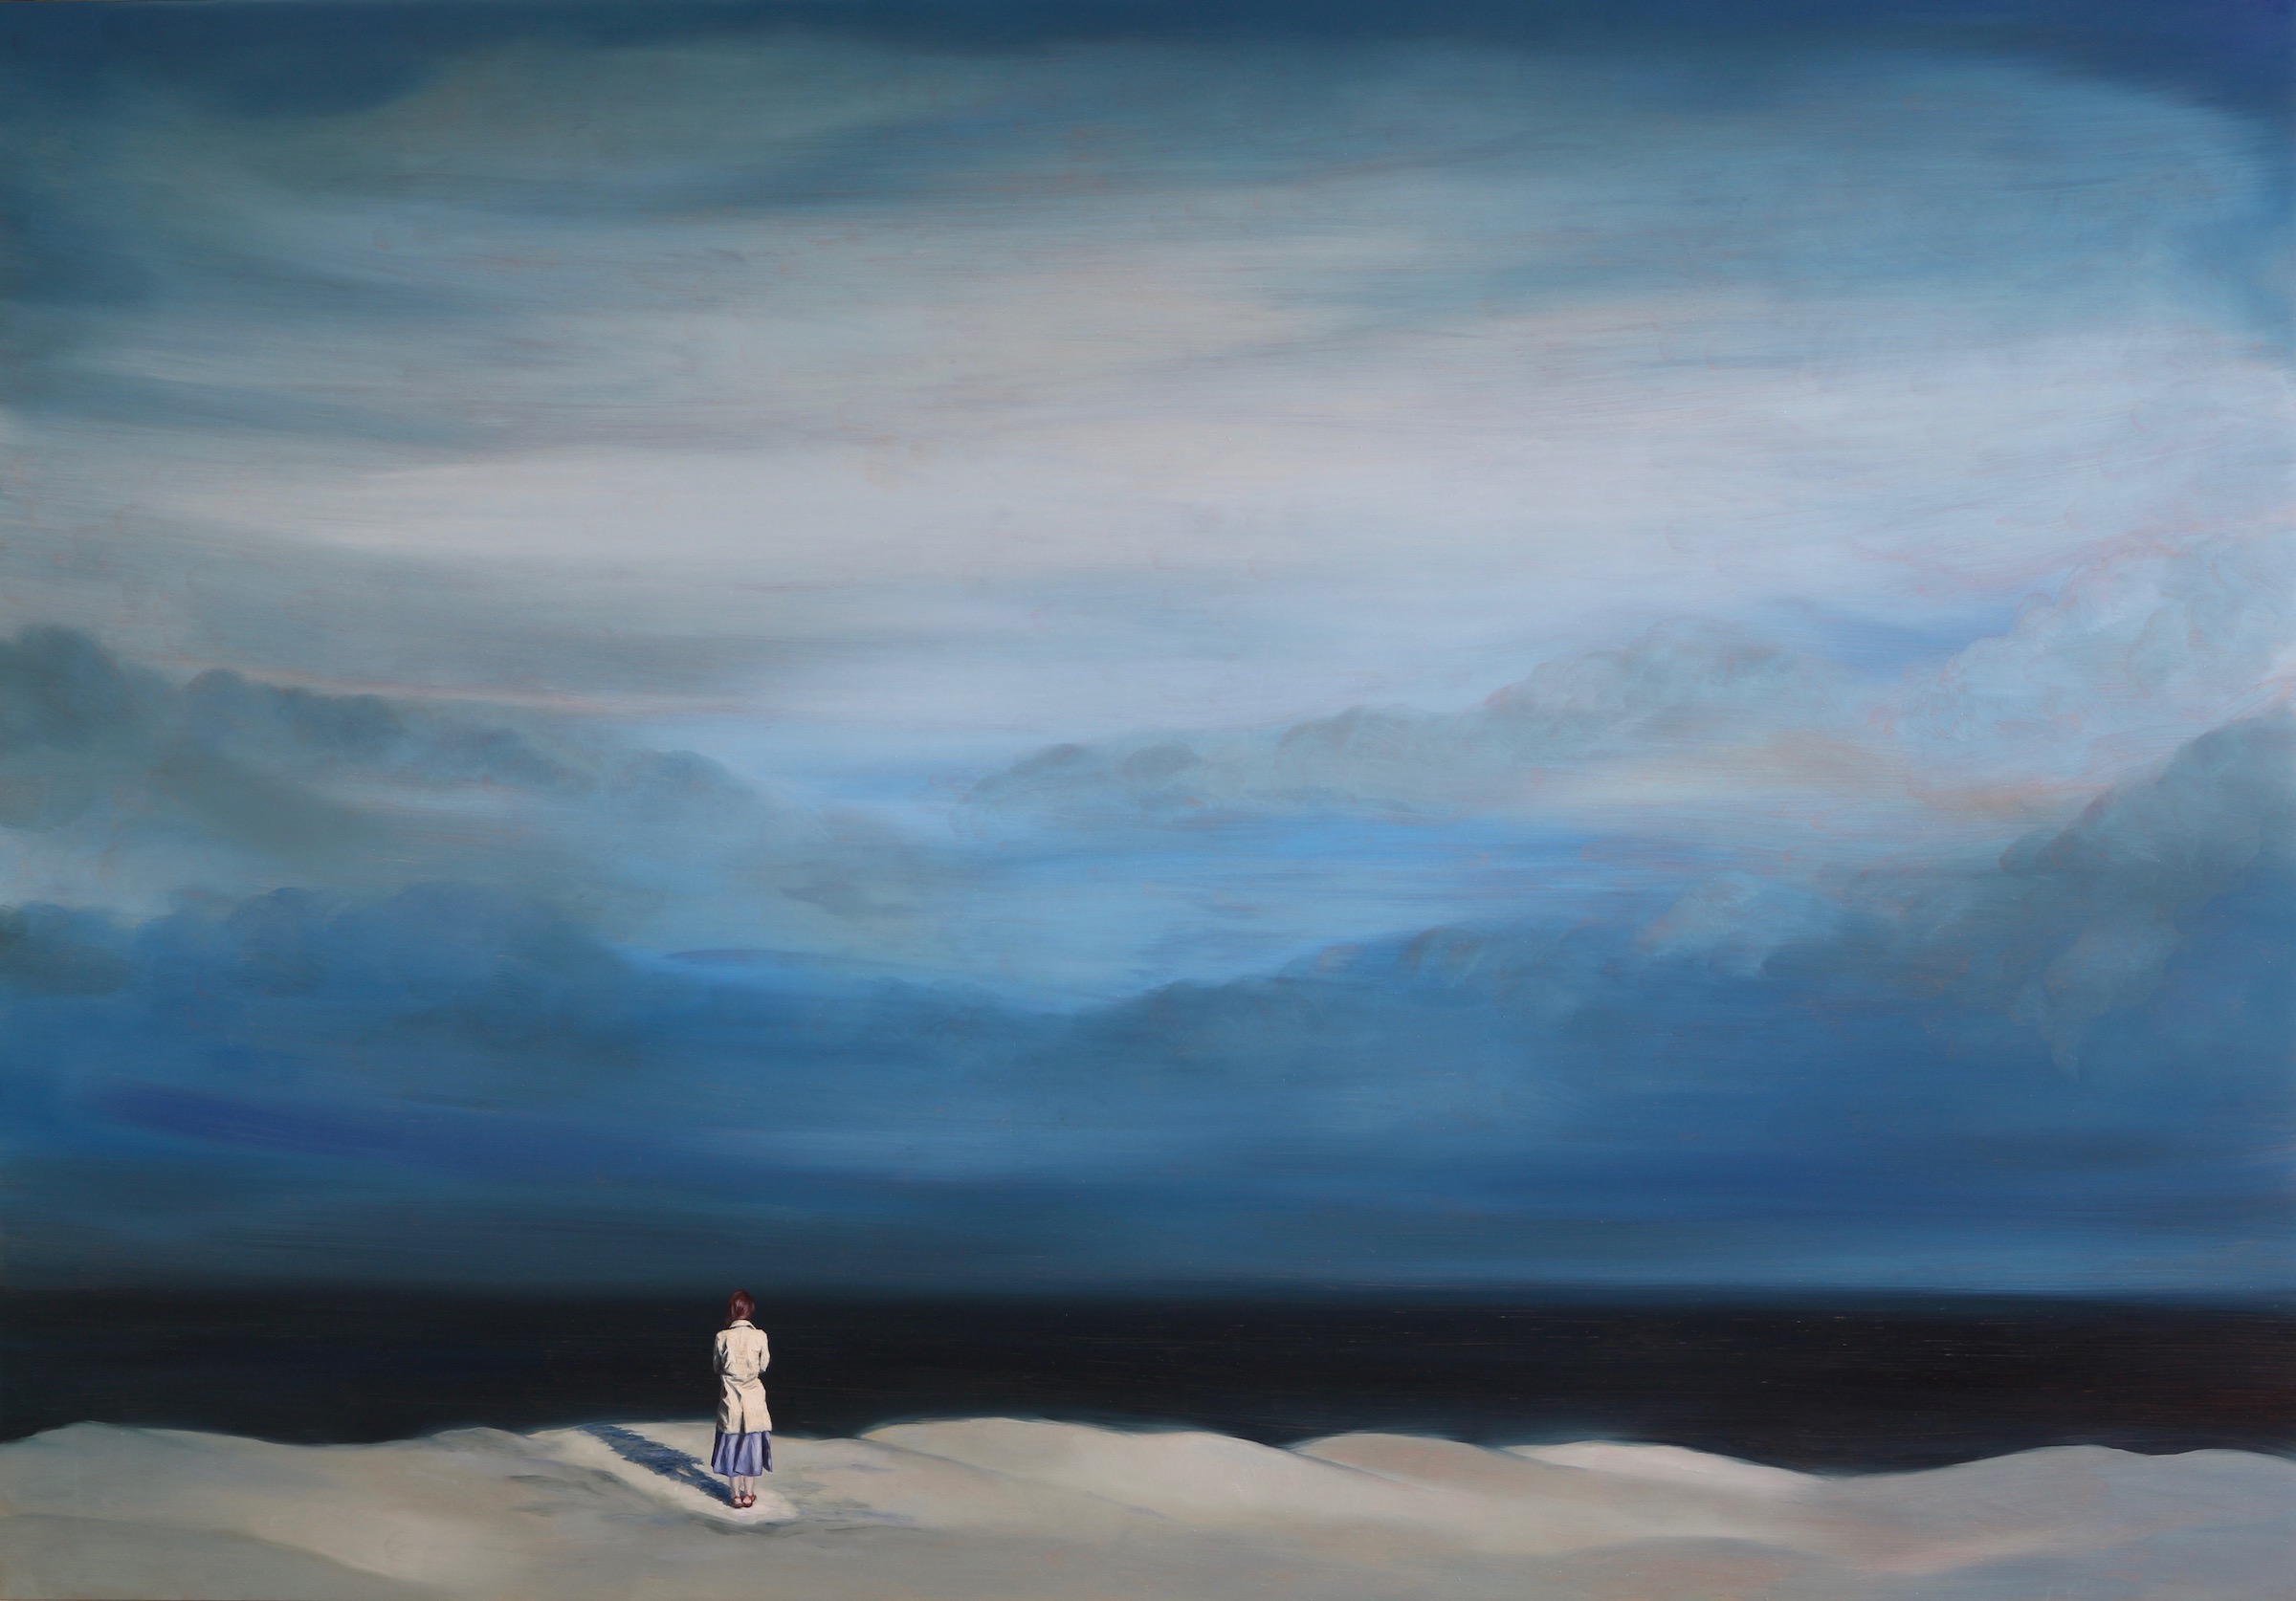 The Silent Sea, Oil on wood panel, 70x100cm, 2017